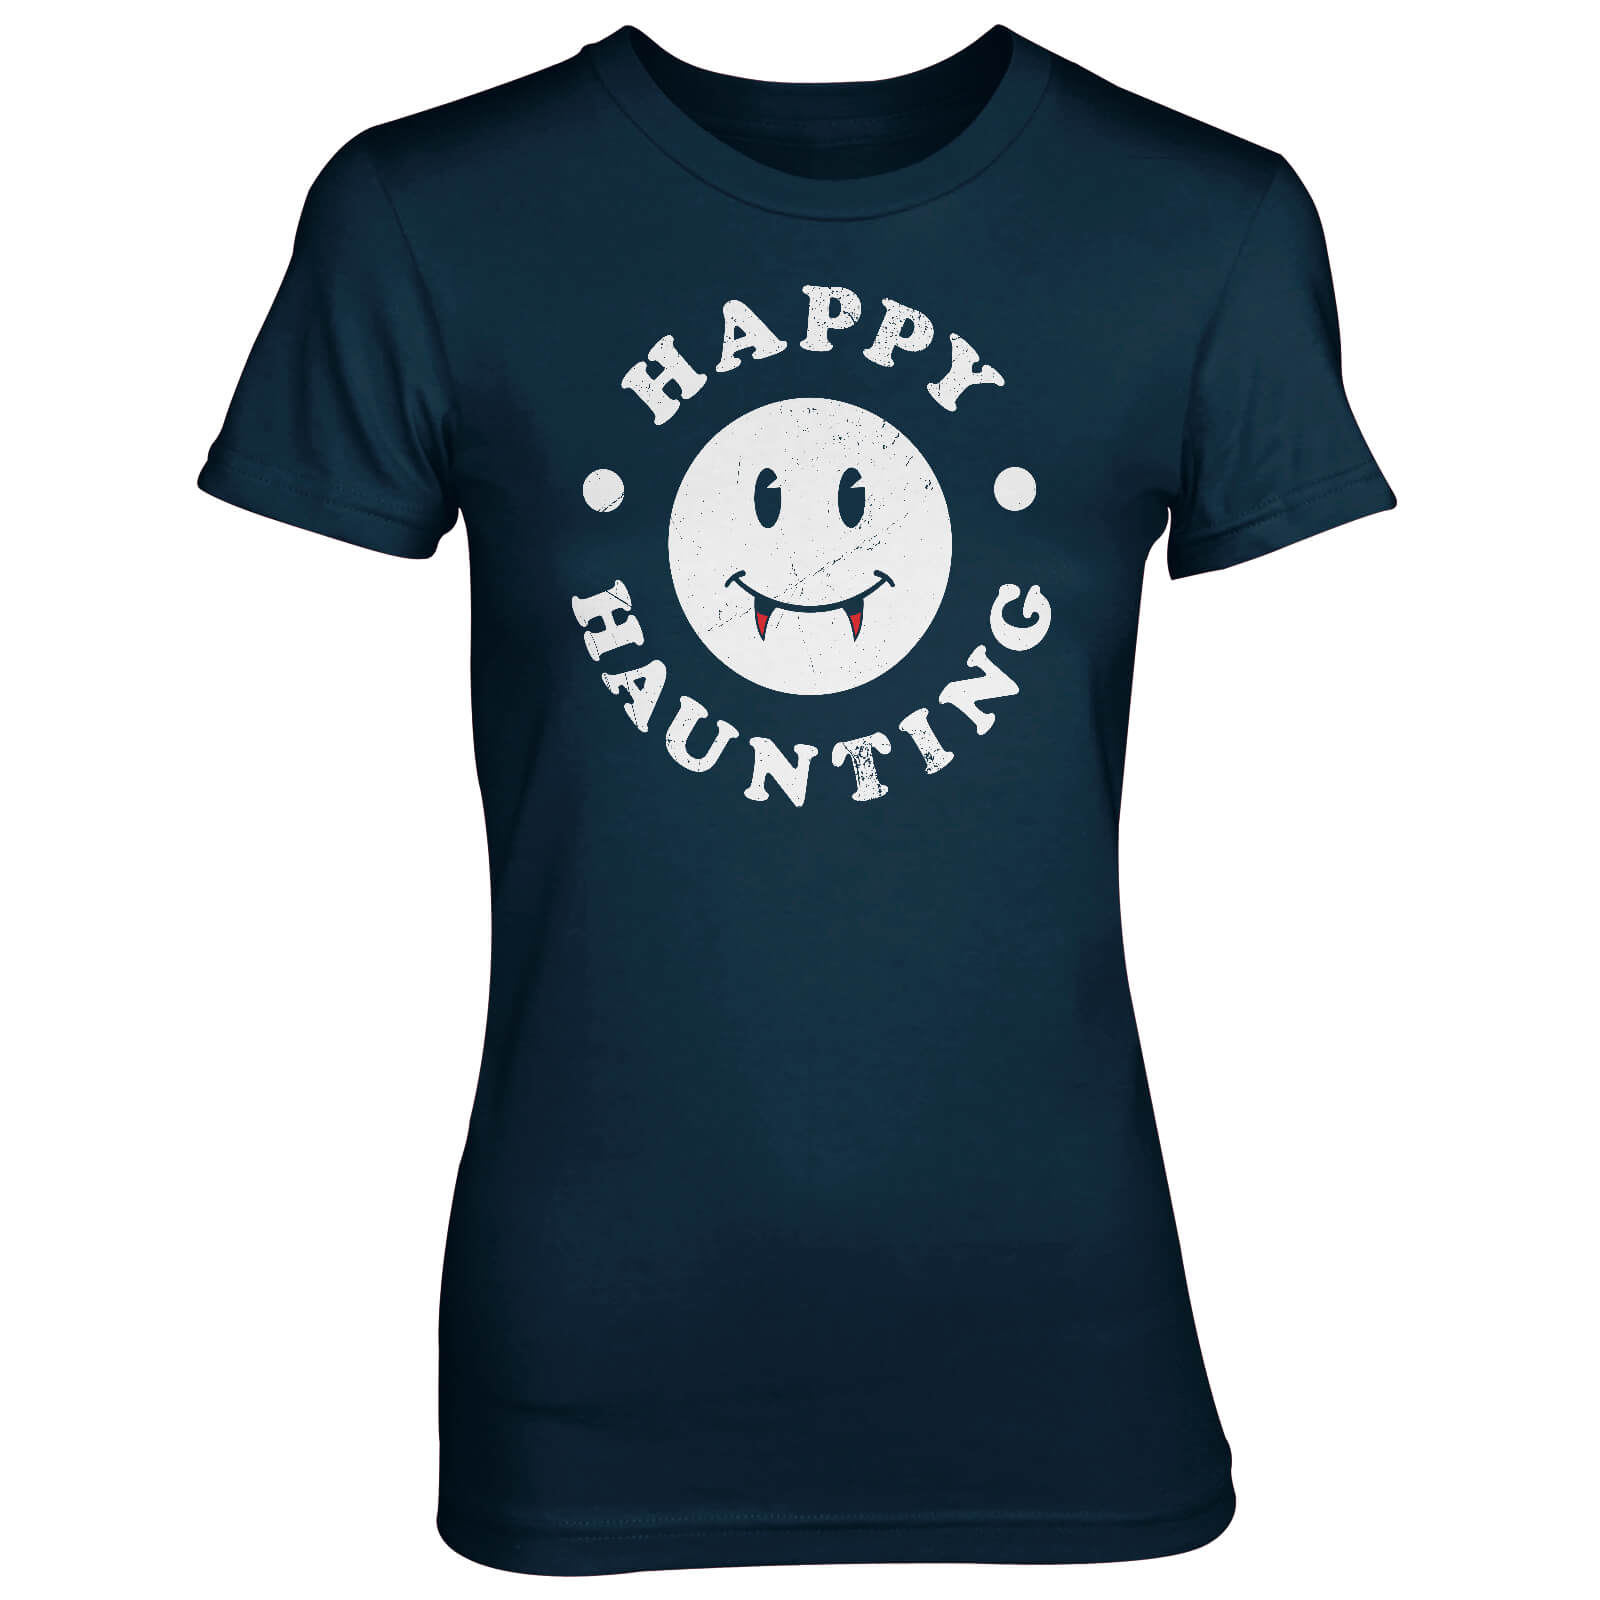 Happy Haunting Women's Navy T-Shirt - S - Navy